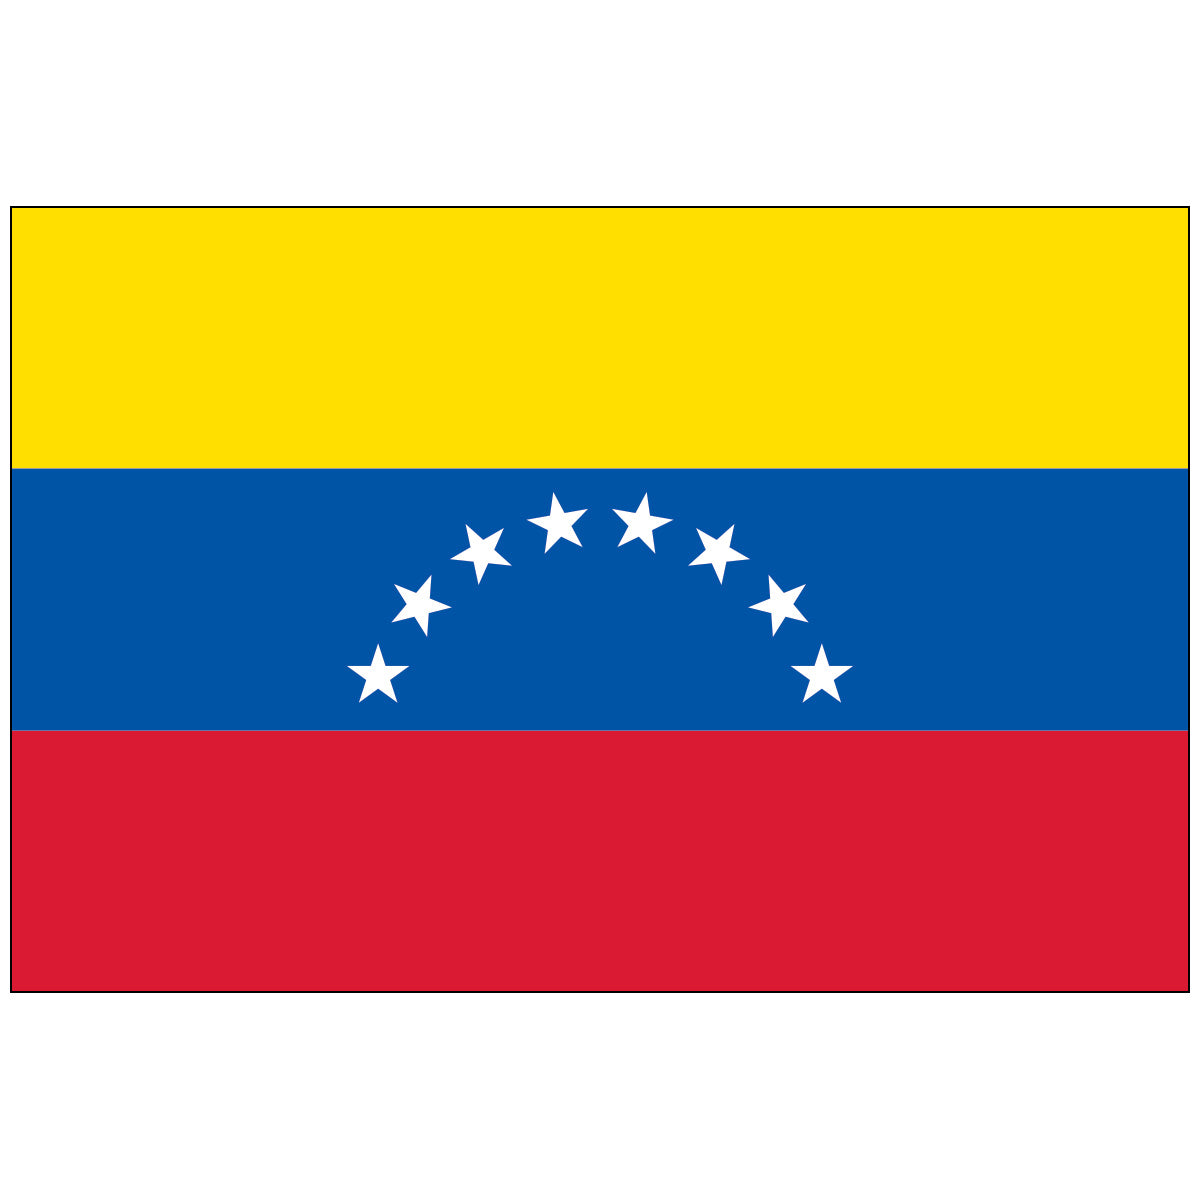 Venezuela - World Flag